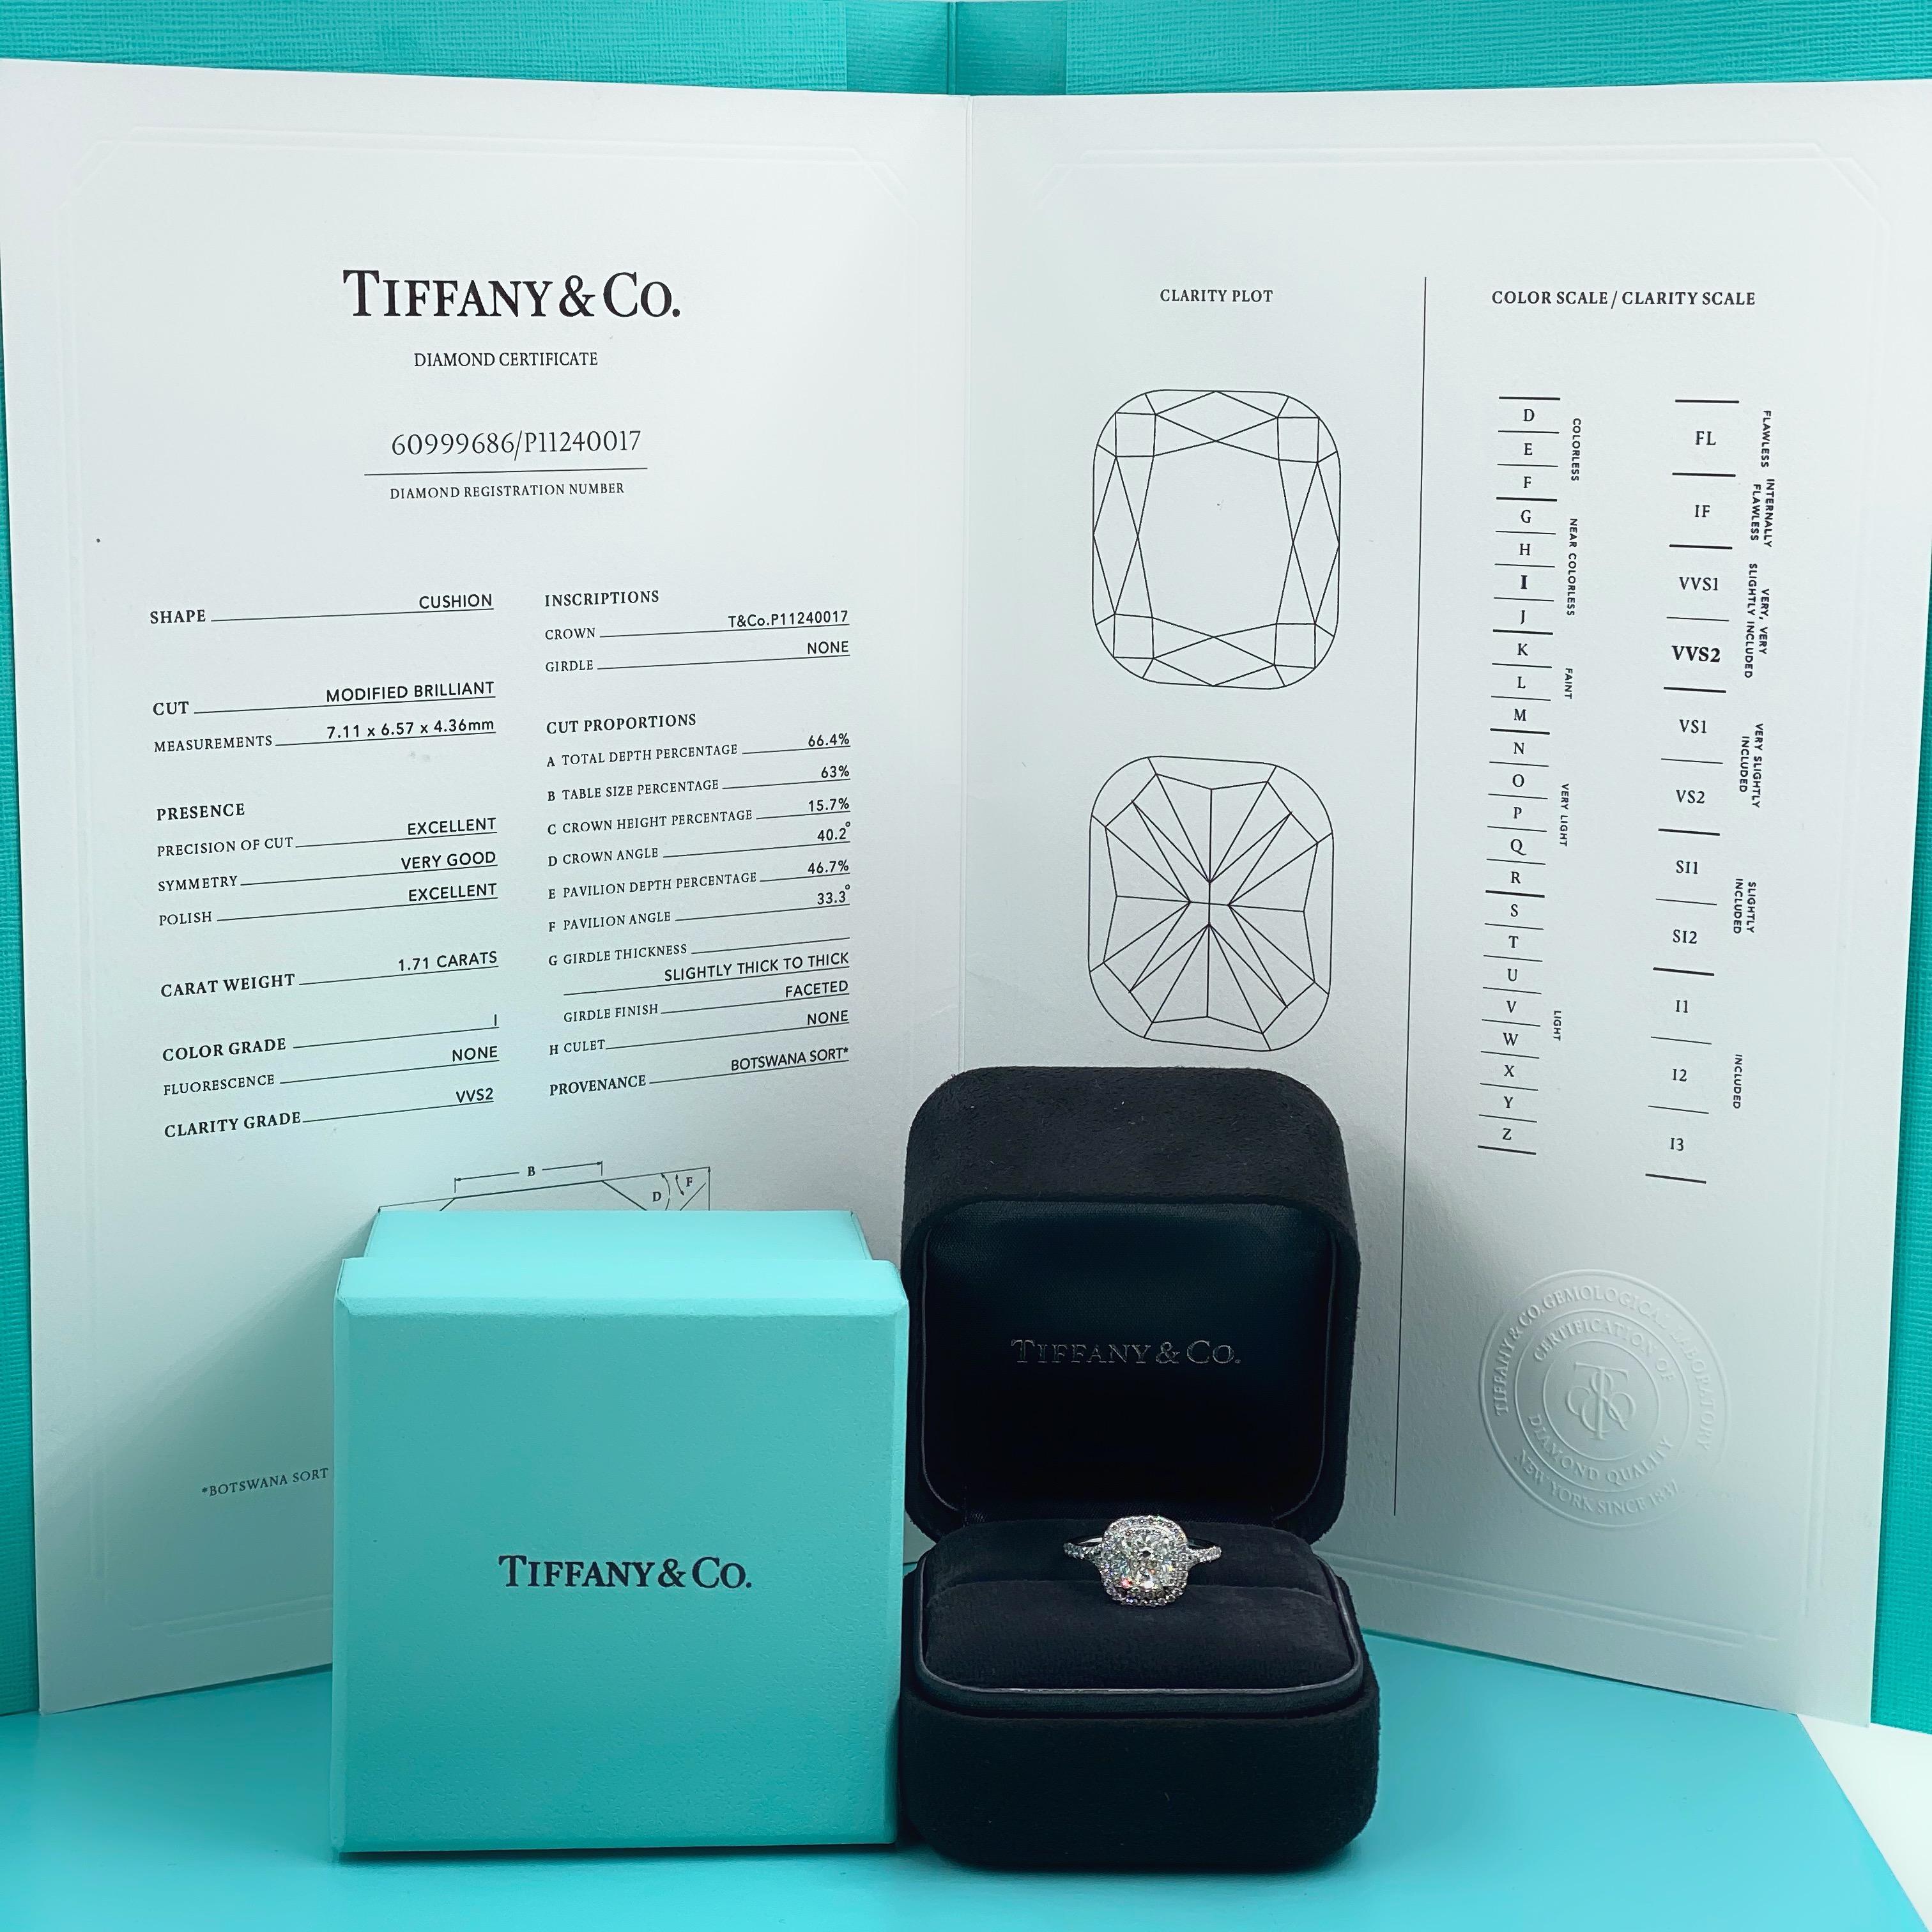 Tiffany & Co

Style:  Soleste Double Halo Engagement Ring
Metal:  Platinum PT950
TCW:  1.71 tcw
Main Diamond:  Cushion Modified Brilliant Diamond 1.71 cts 
Color & Clarity:  I - VVS2
Accent Diamonds:  80 Round Brilliant Cuts 0.50 tcw
Hallmark: 